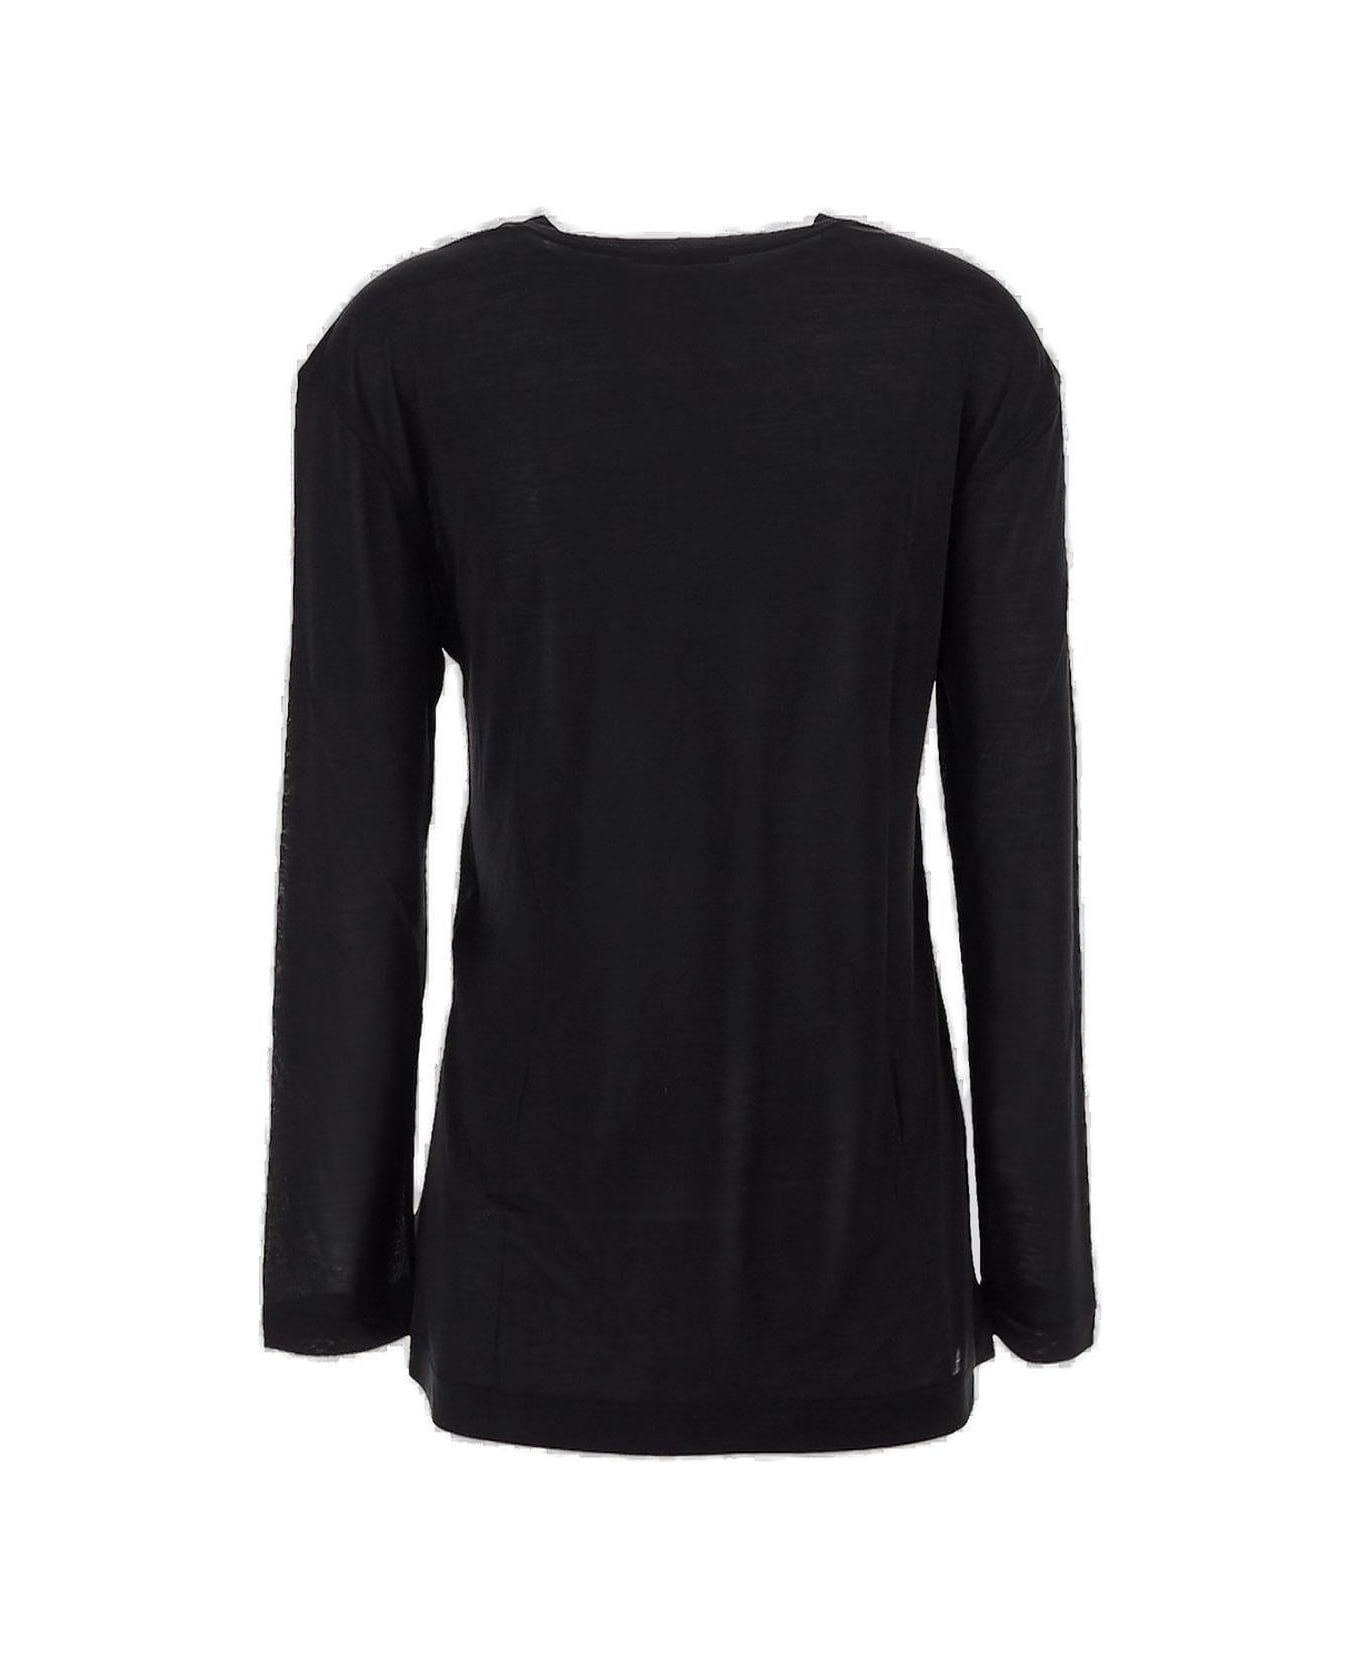 Lemaire Long-sleeved Crewneck T-shirt - Black Tシャツ